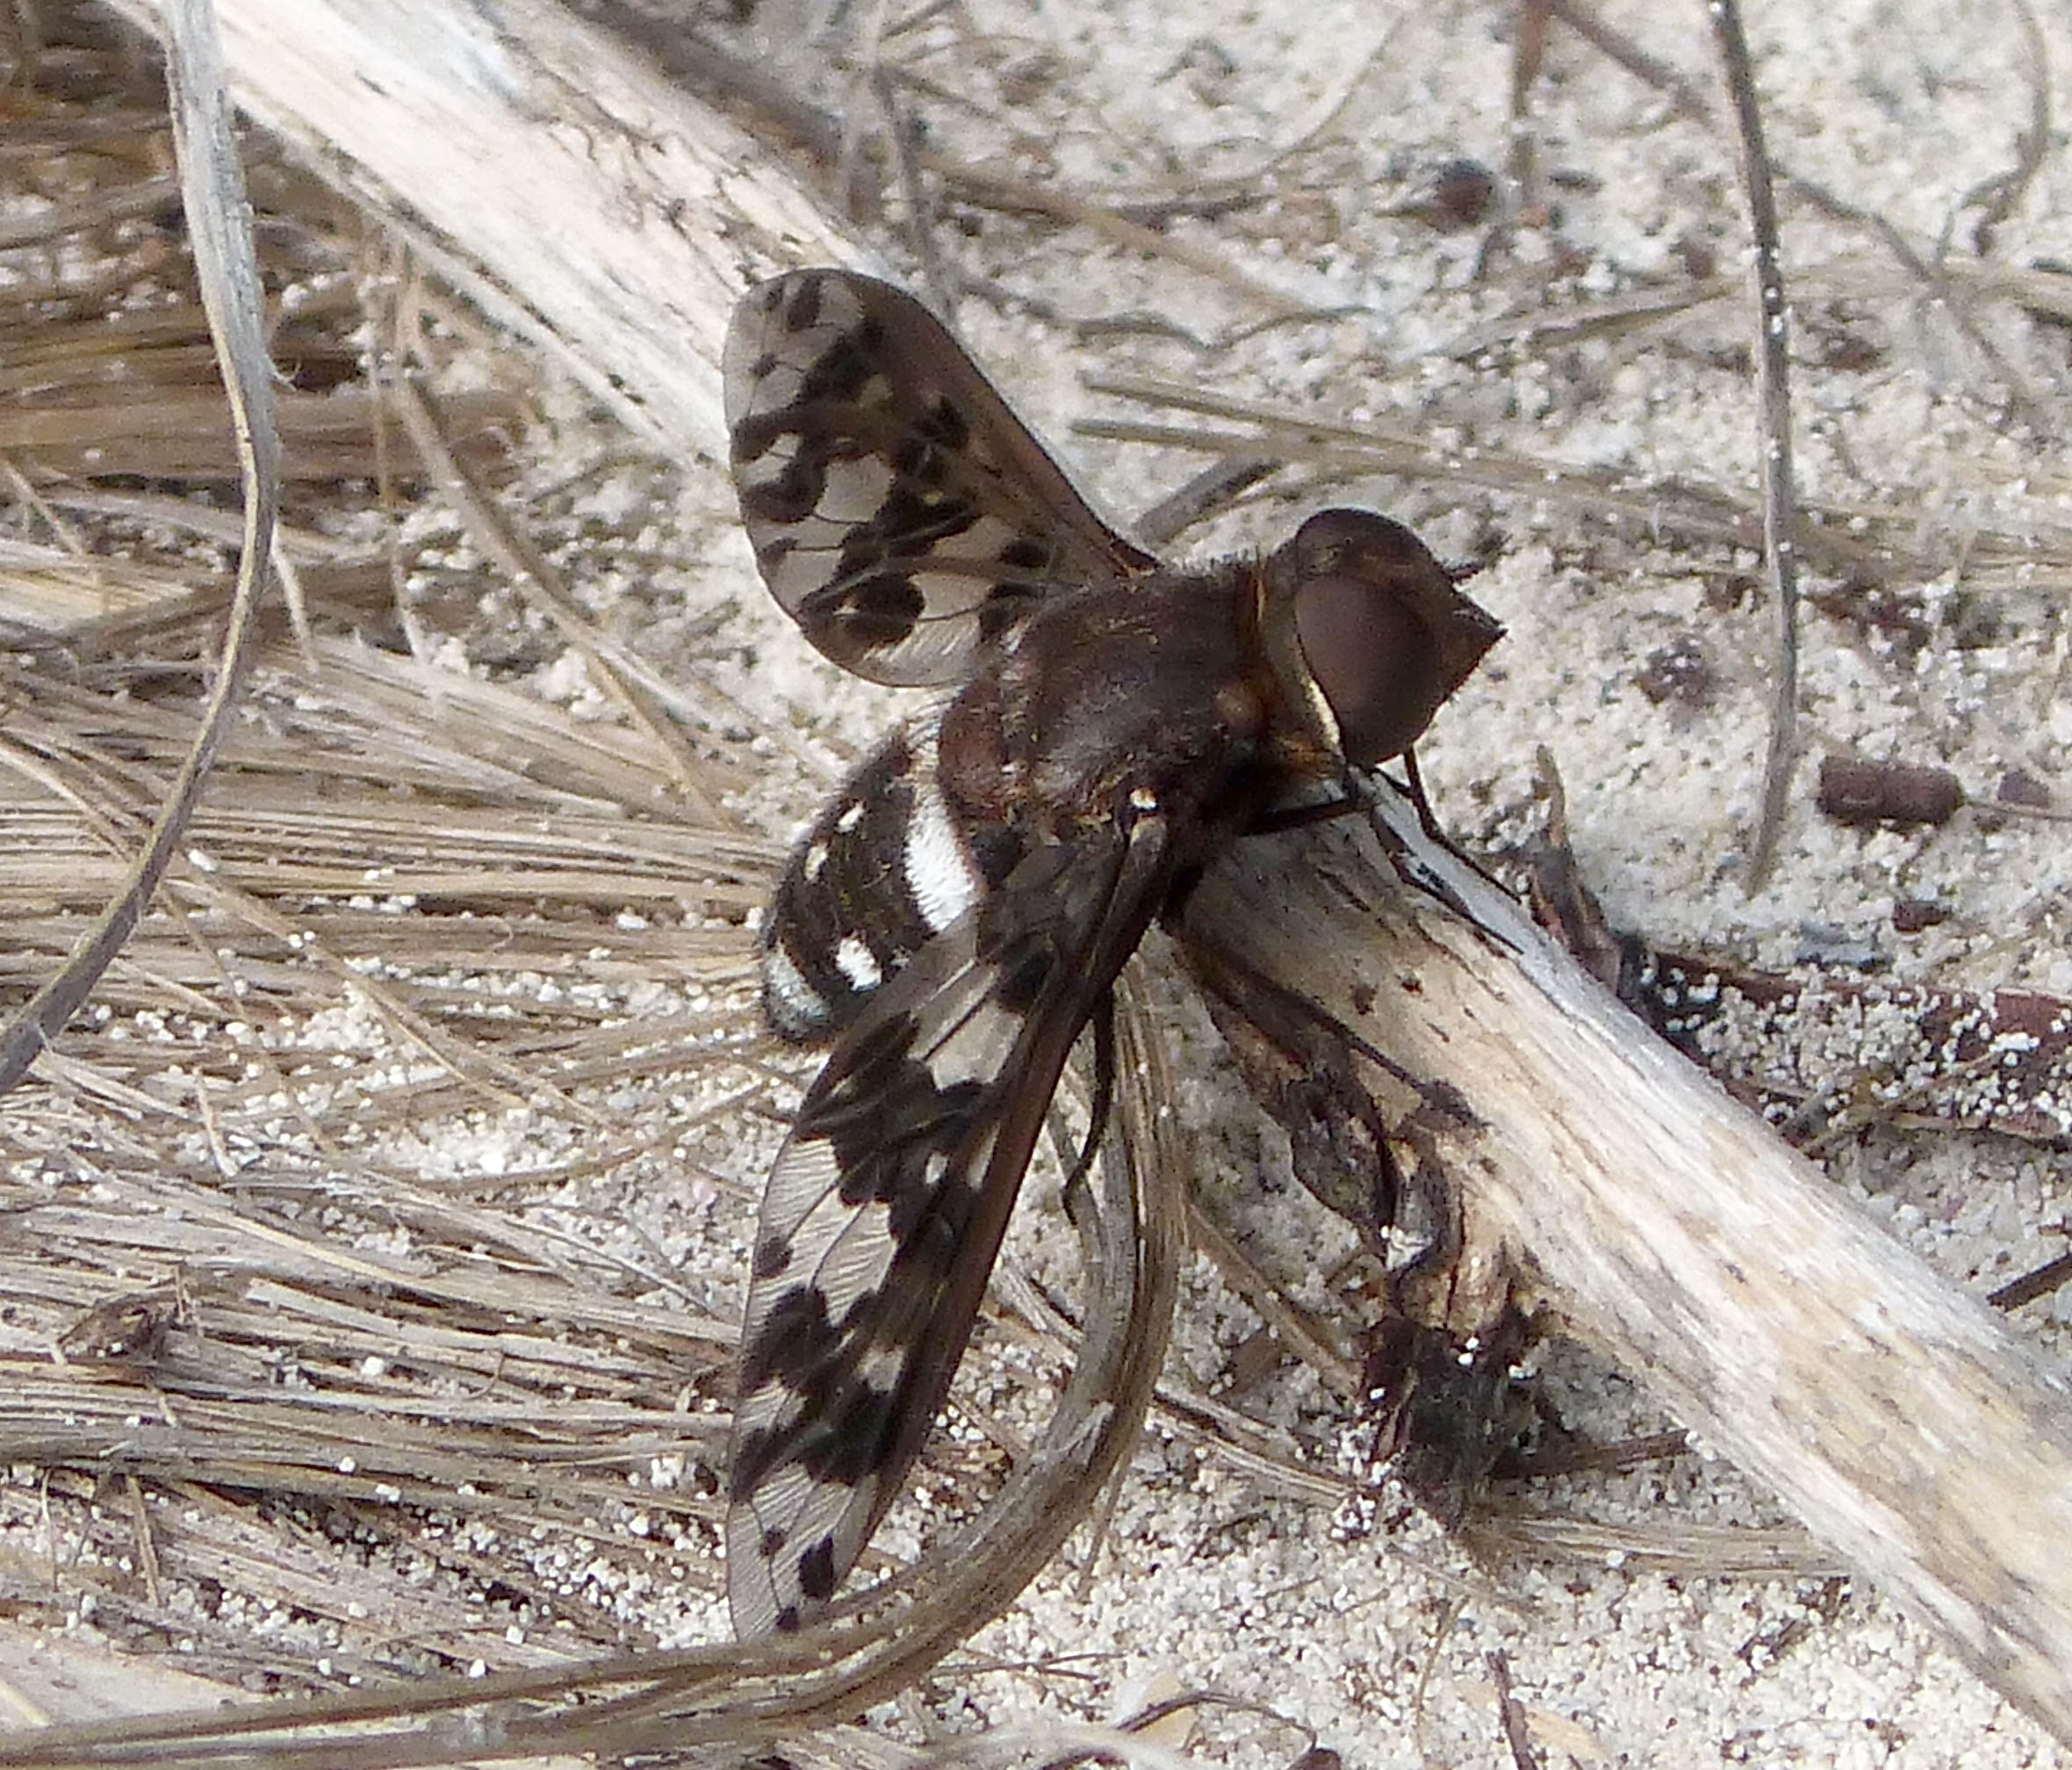 Beefly. Anthracinae. Anthracini. Xenox sp. or Anthracinae. Exoprosopini. Exoprosopa species. - Flickr - gailhampshire (2)